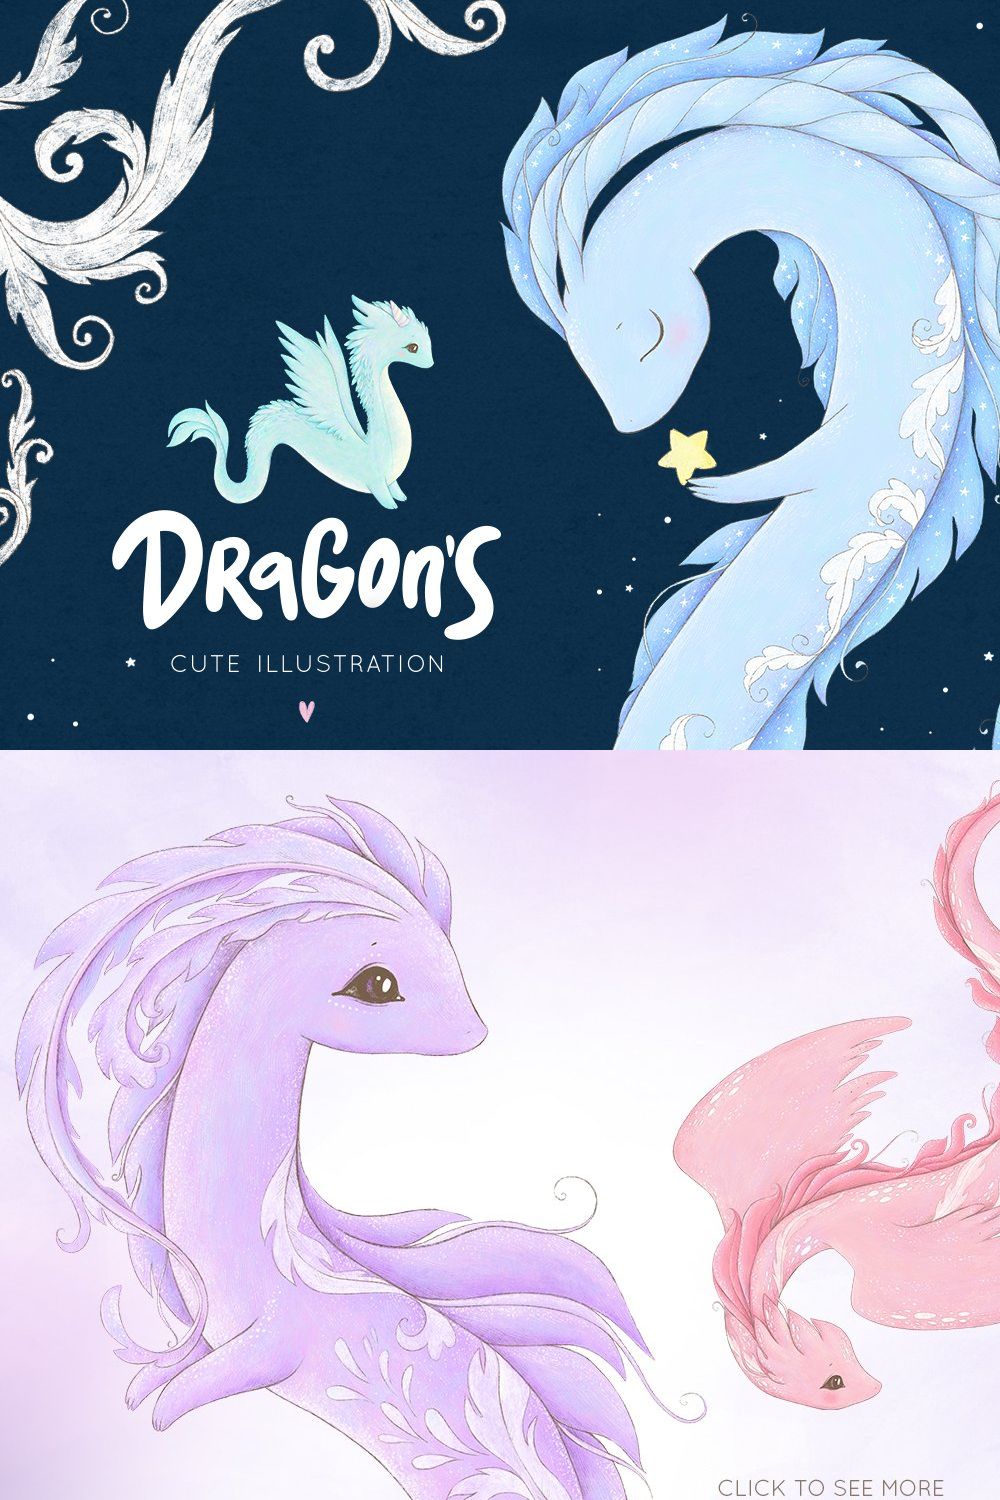 Fantasy Dragon illustration pinterest preview image.